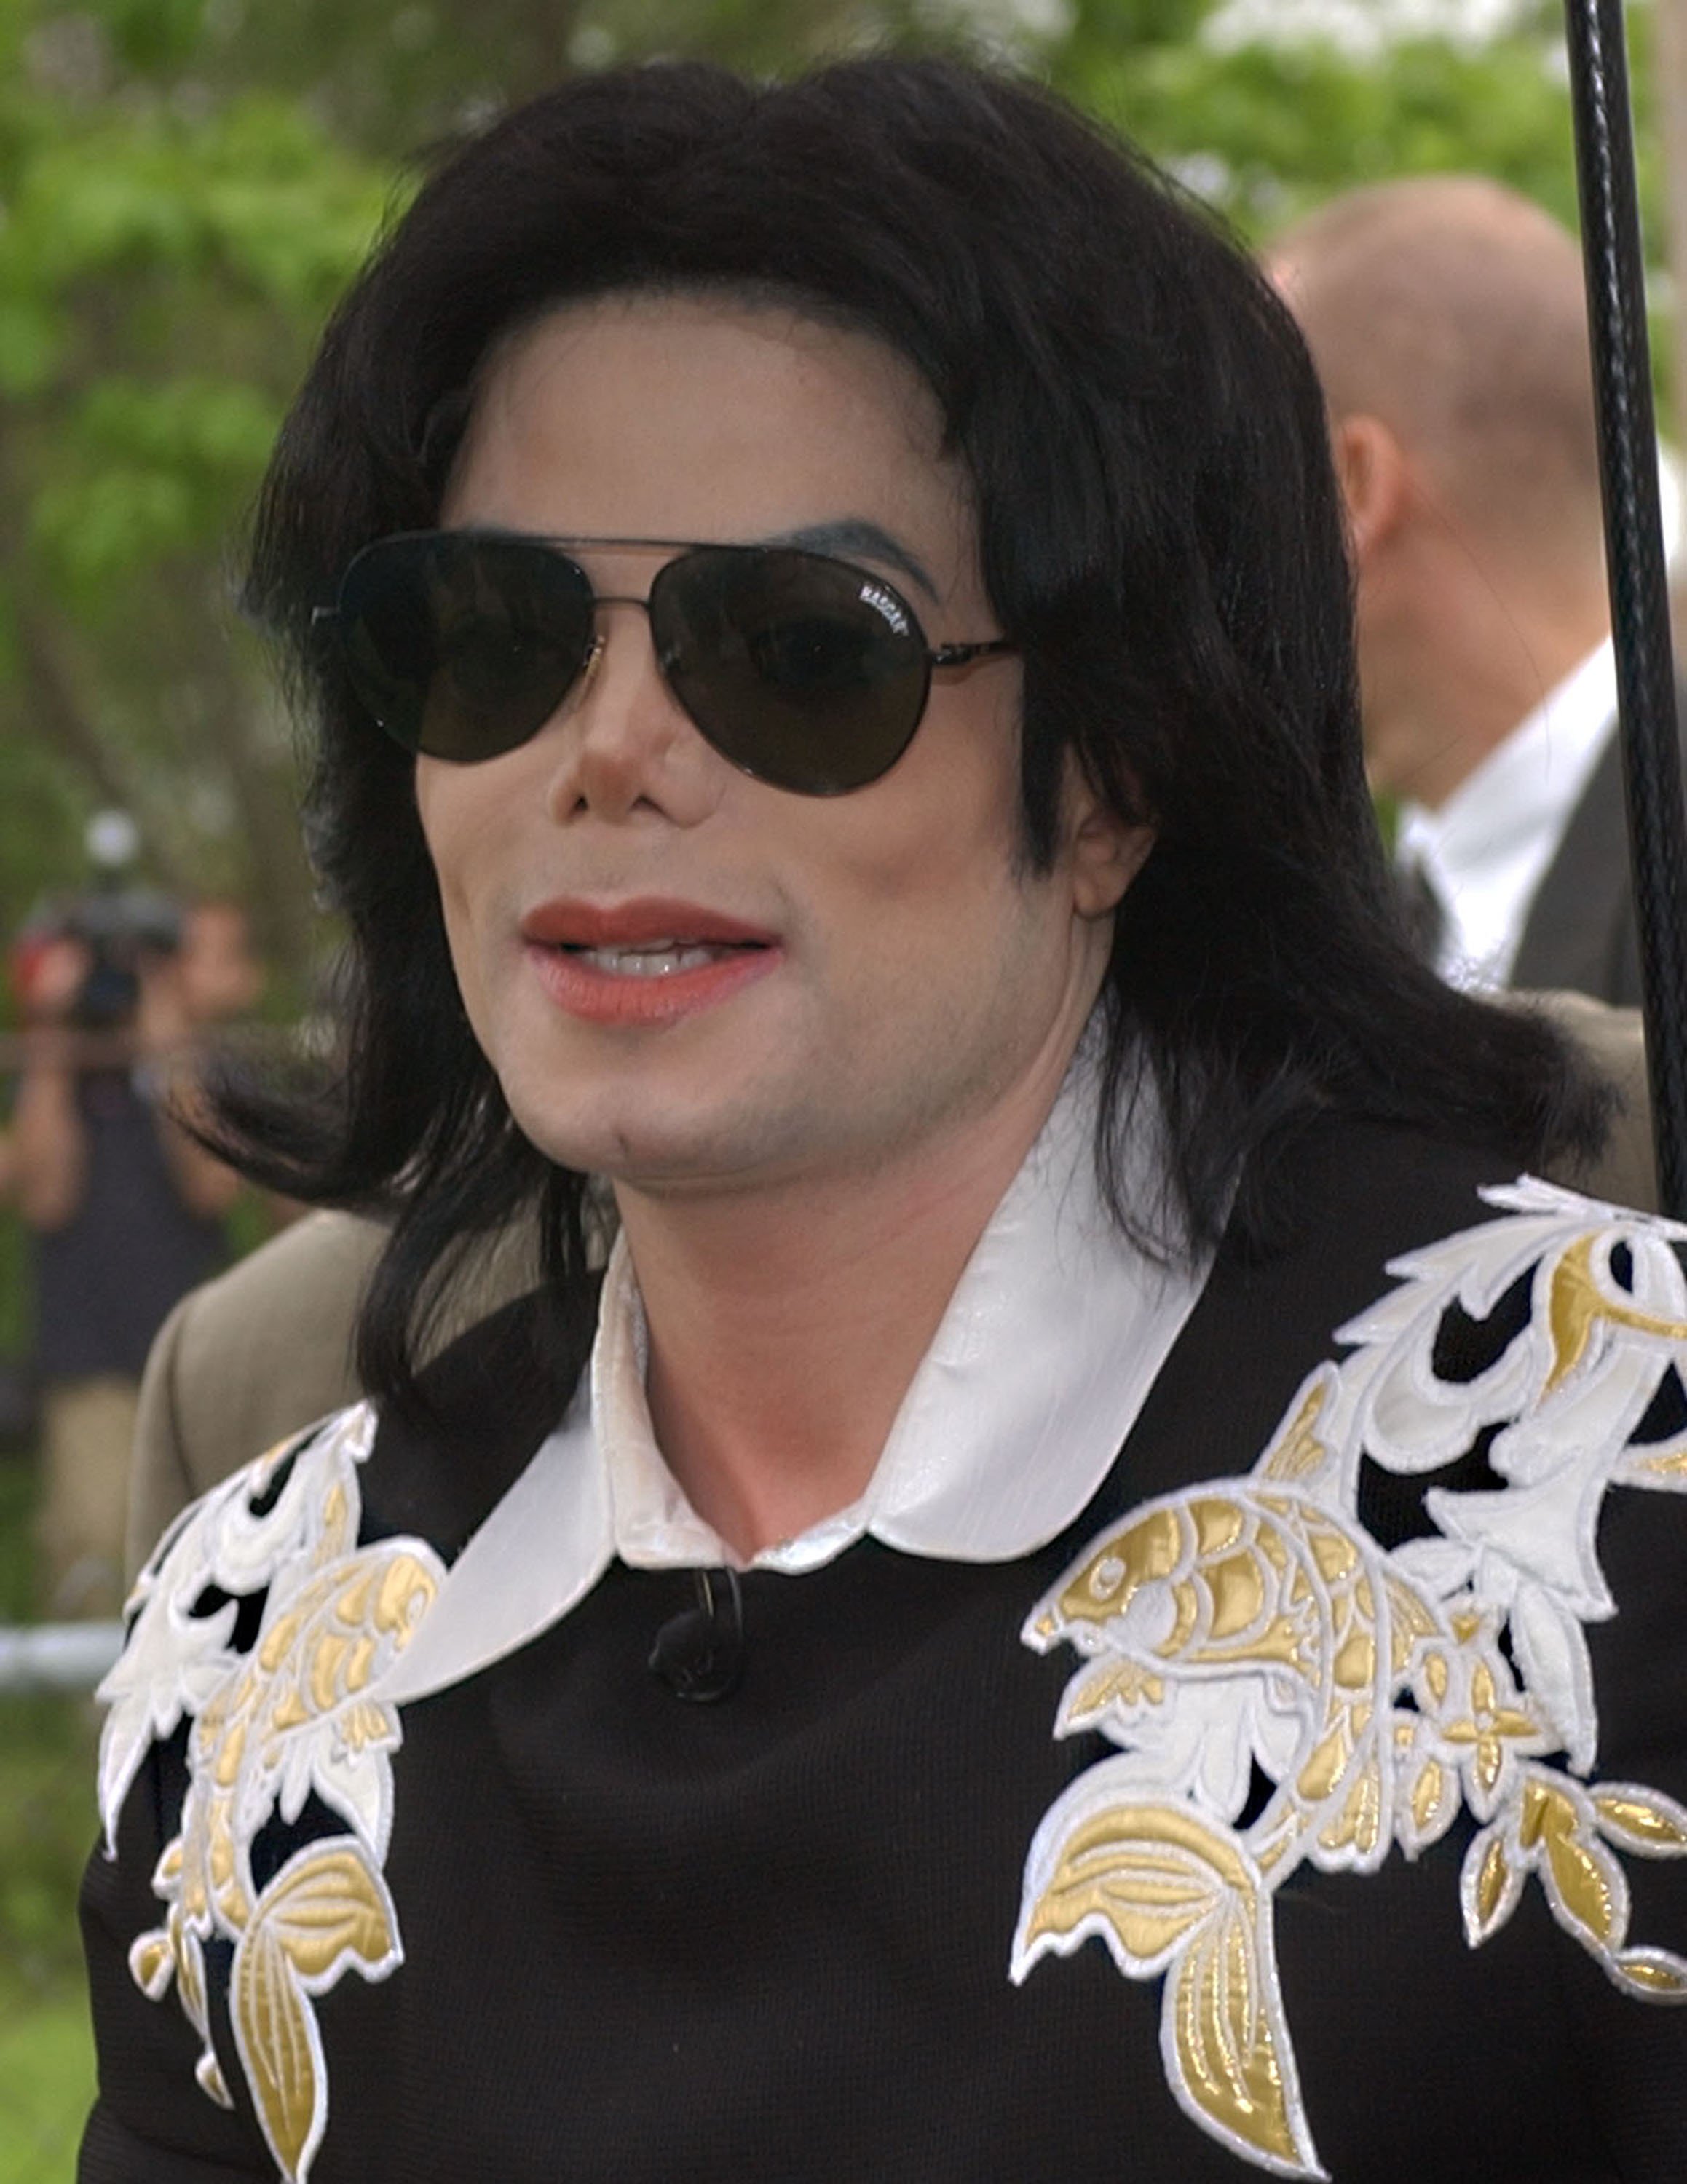 Michael Jackson I Image: Getty Images